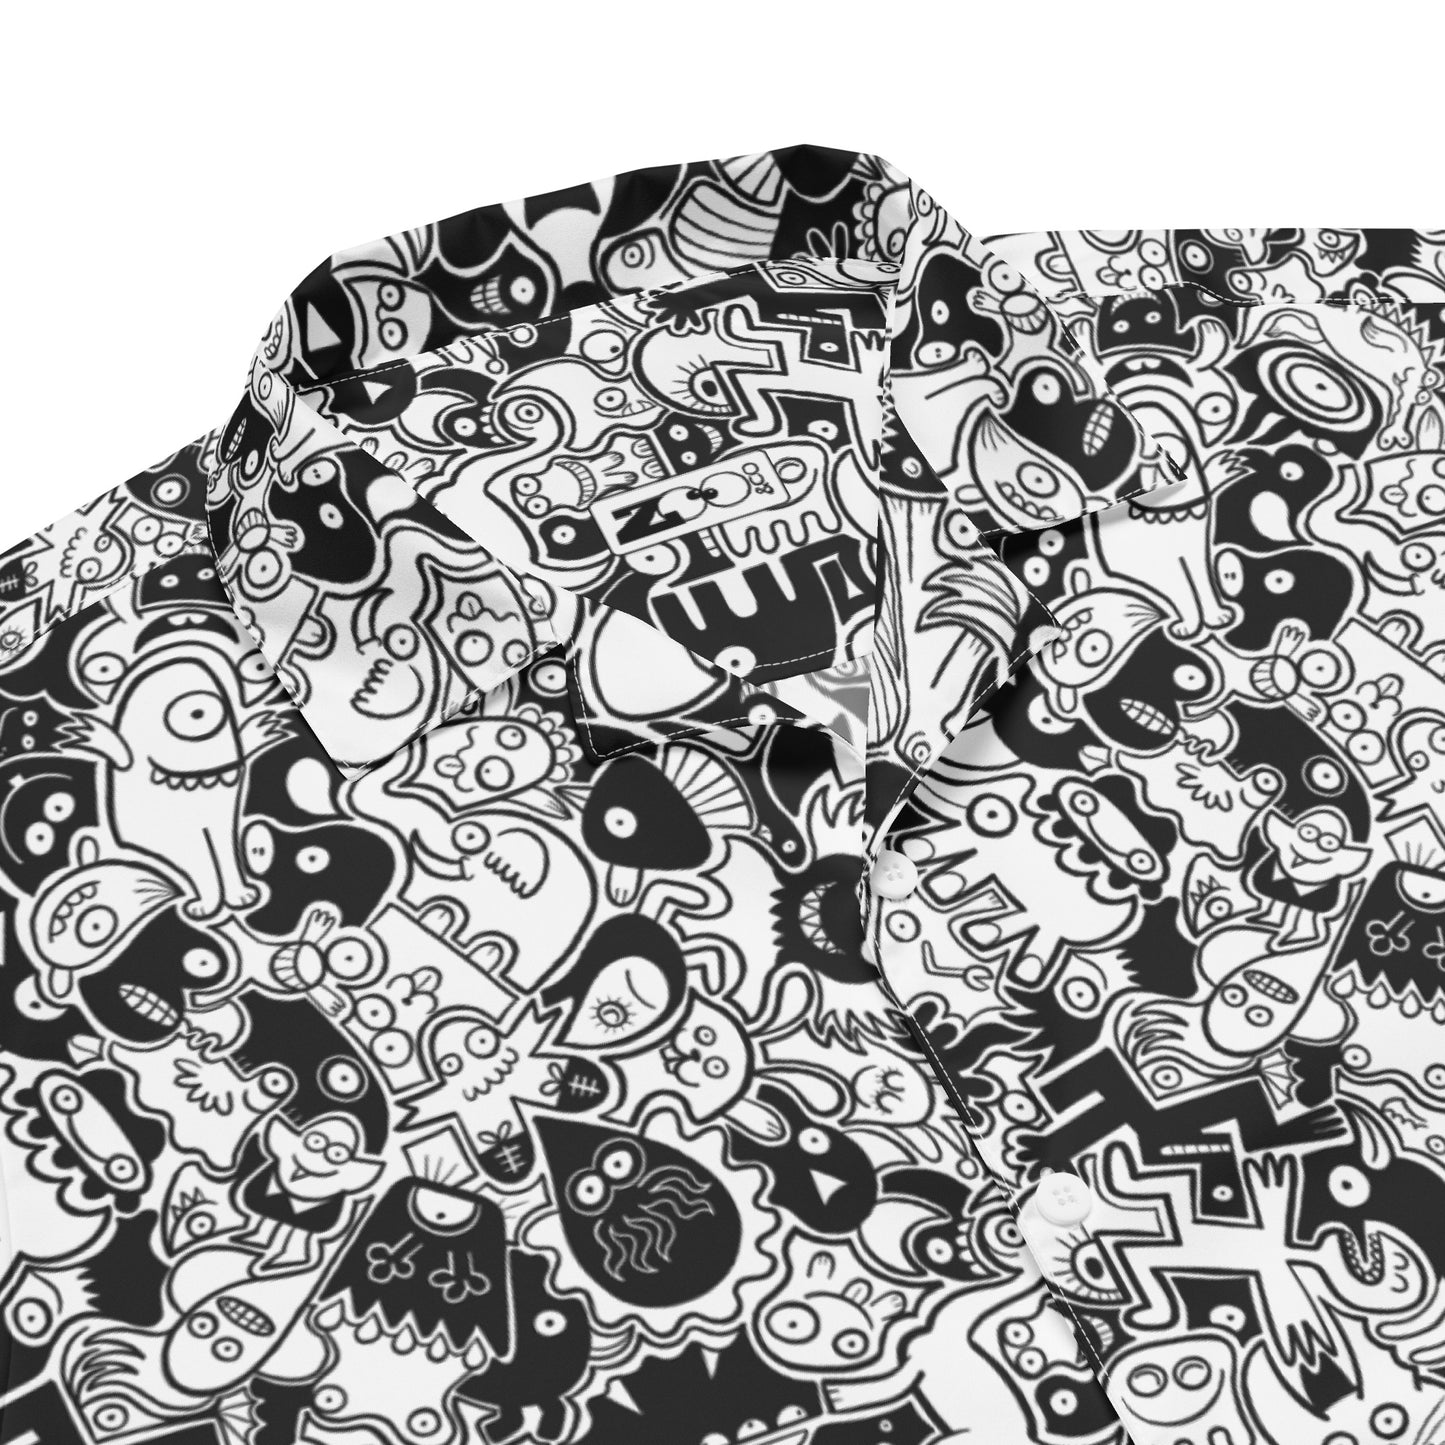 Joyful crowd of black and white doodle creatures Unisex button shirt. Product details